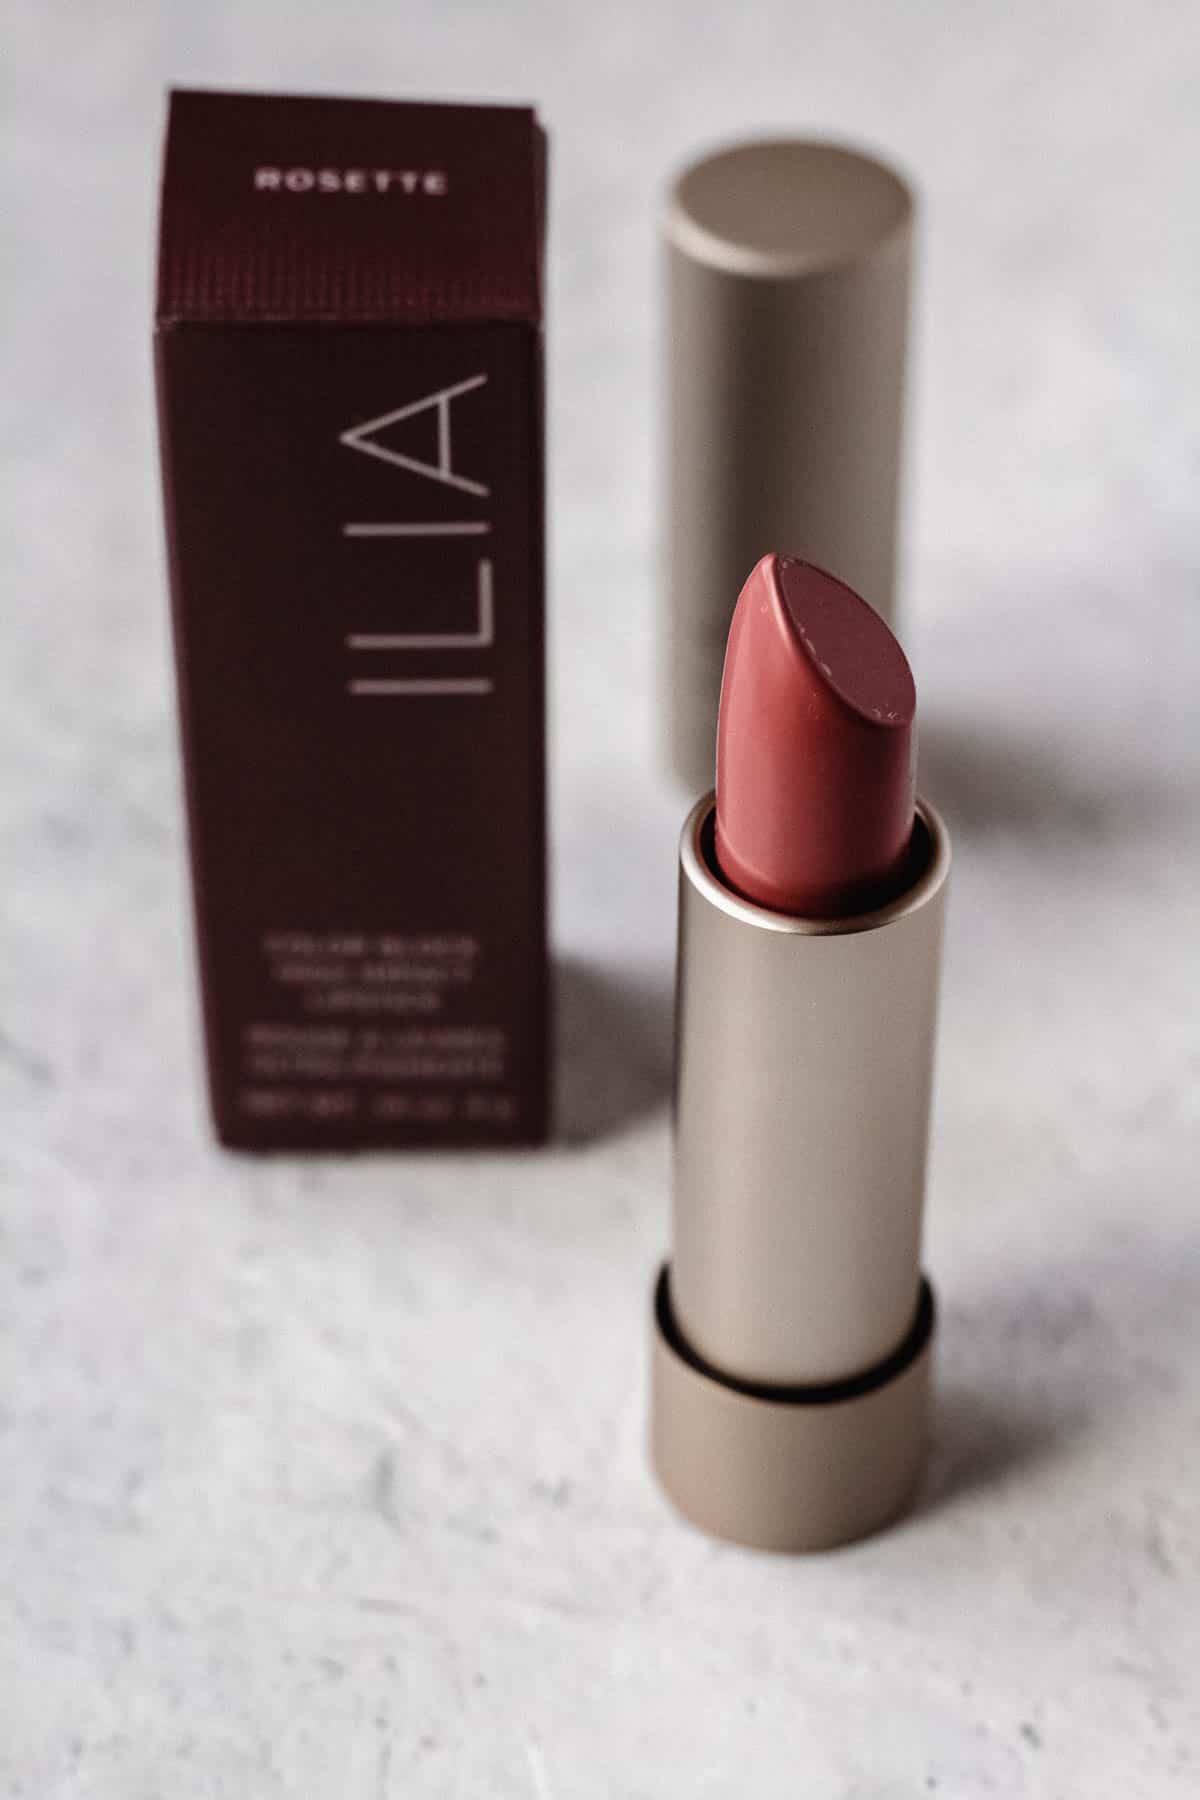 Ilia Beauty lipstick in rosette on a white background